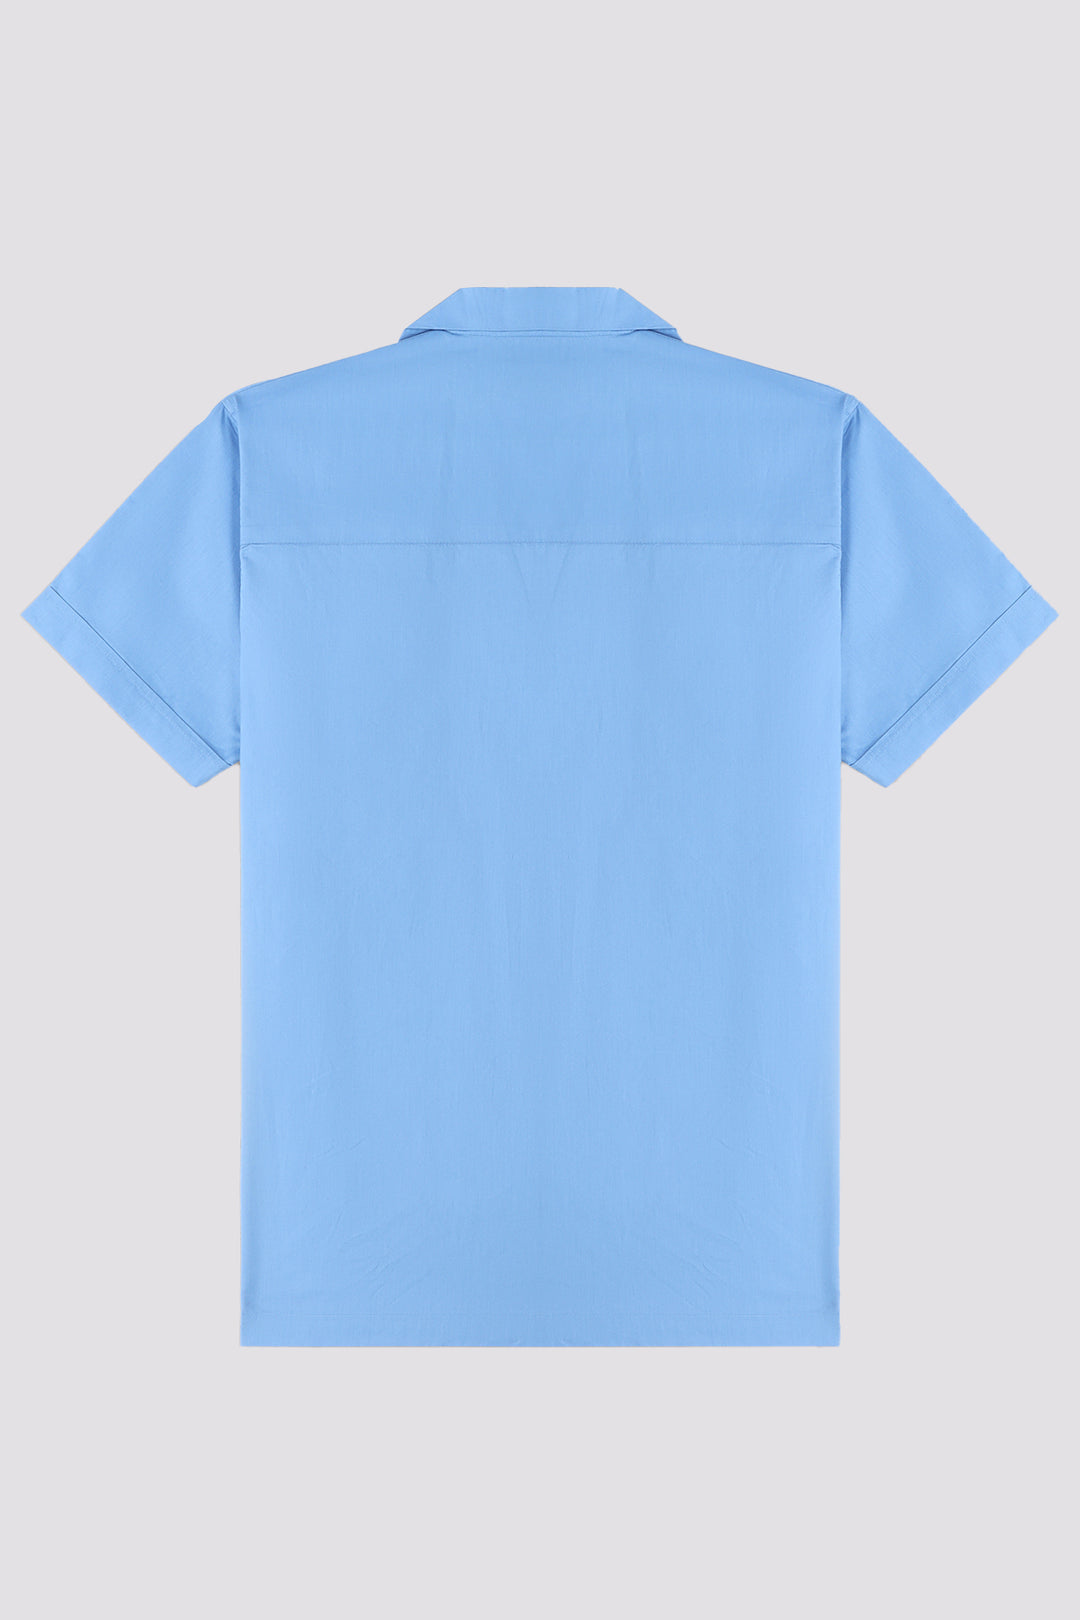 Dusk Blue Casual Resort Shirt - A24 - MS0057R